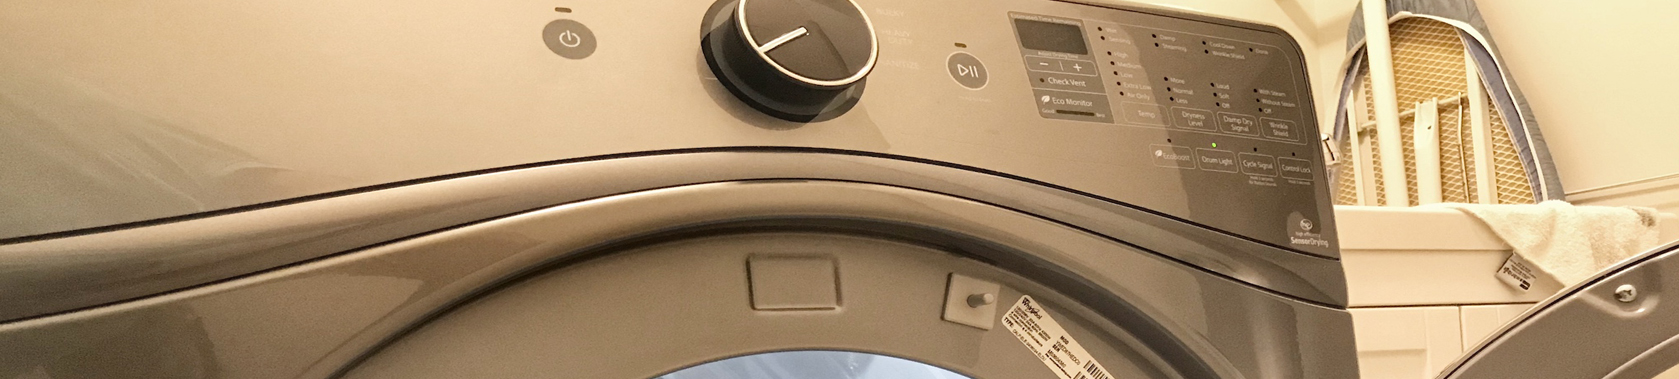 Dryer Repair Airdrie